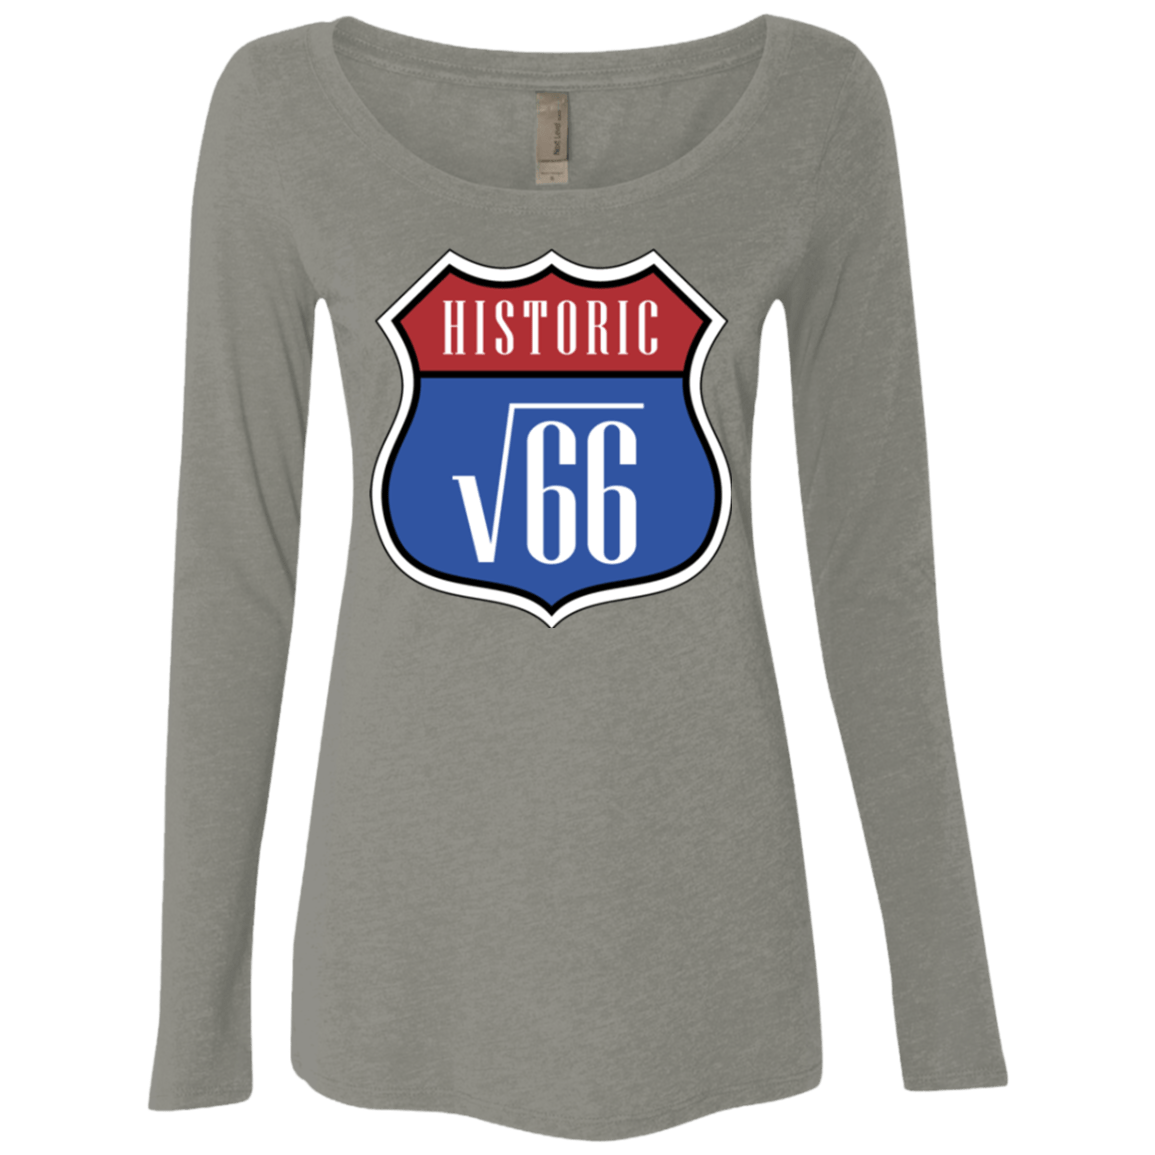 T-Shirts Venetian Grey / Small Route v66 Women's Triblend Long Sleeve Shirt